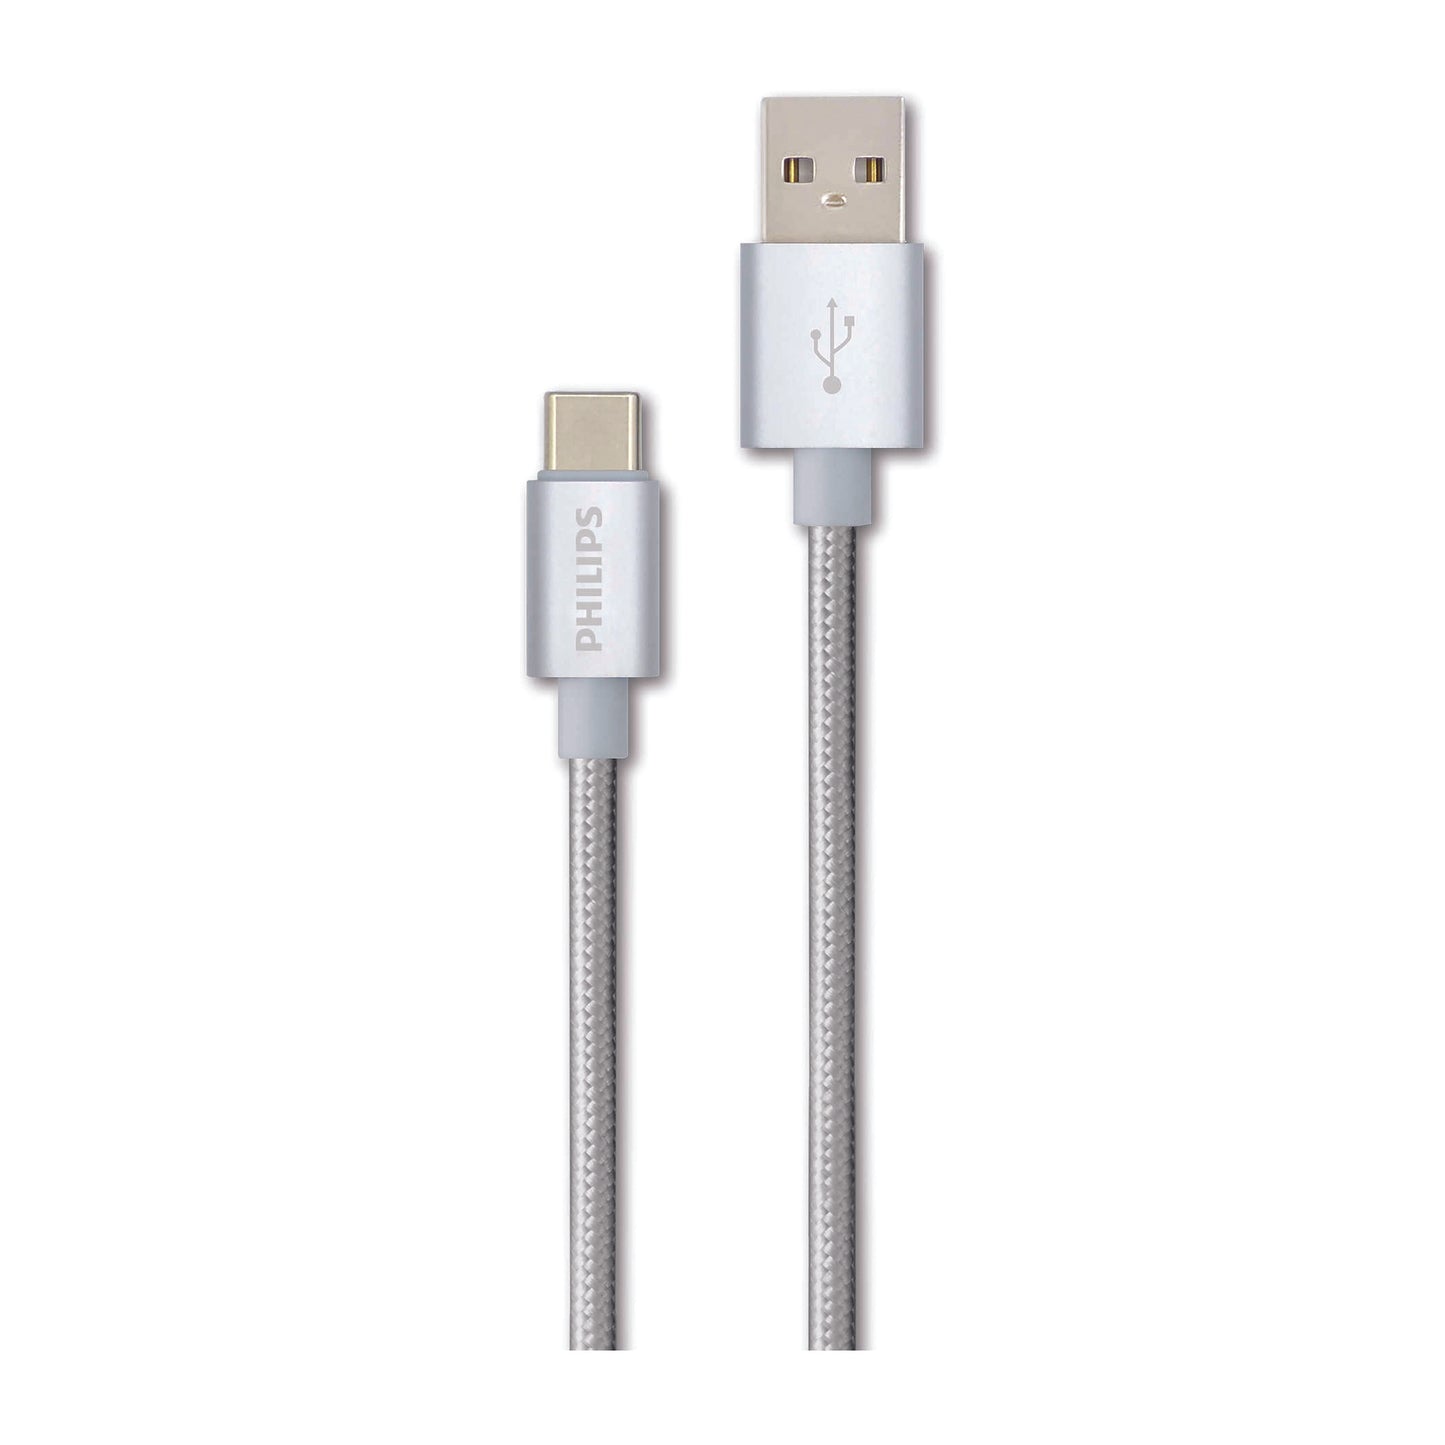 Philips USB-A to USB-C Cable 1.2m DLC2528M/DLC2528G